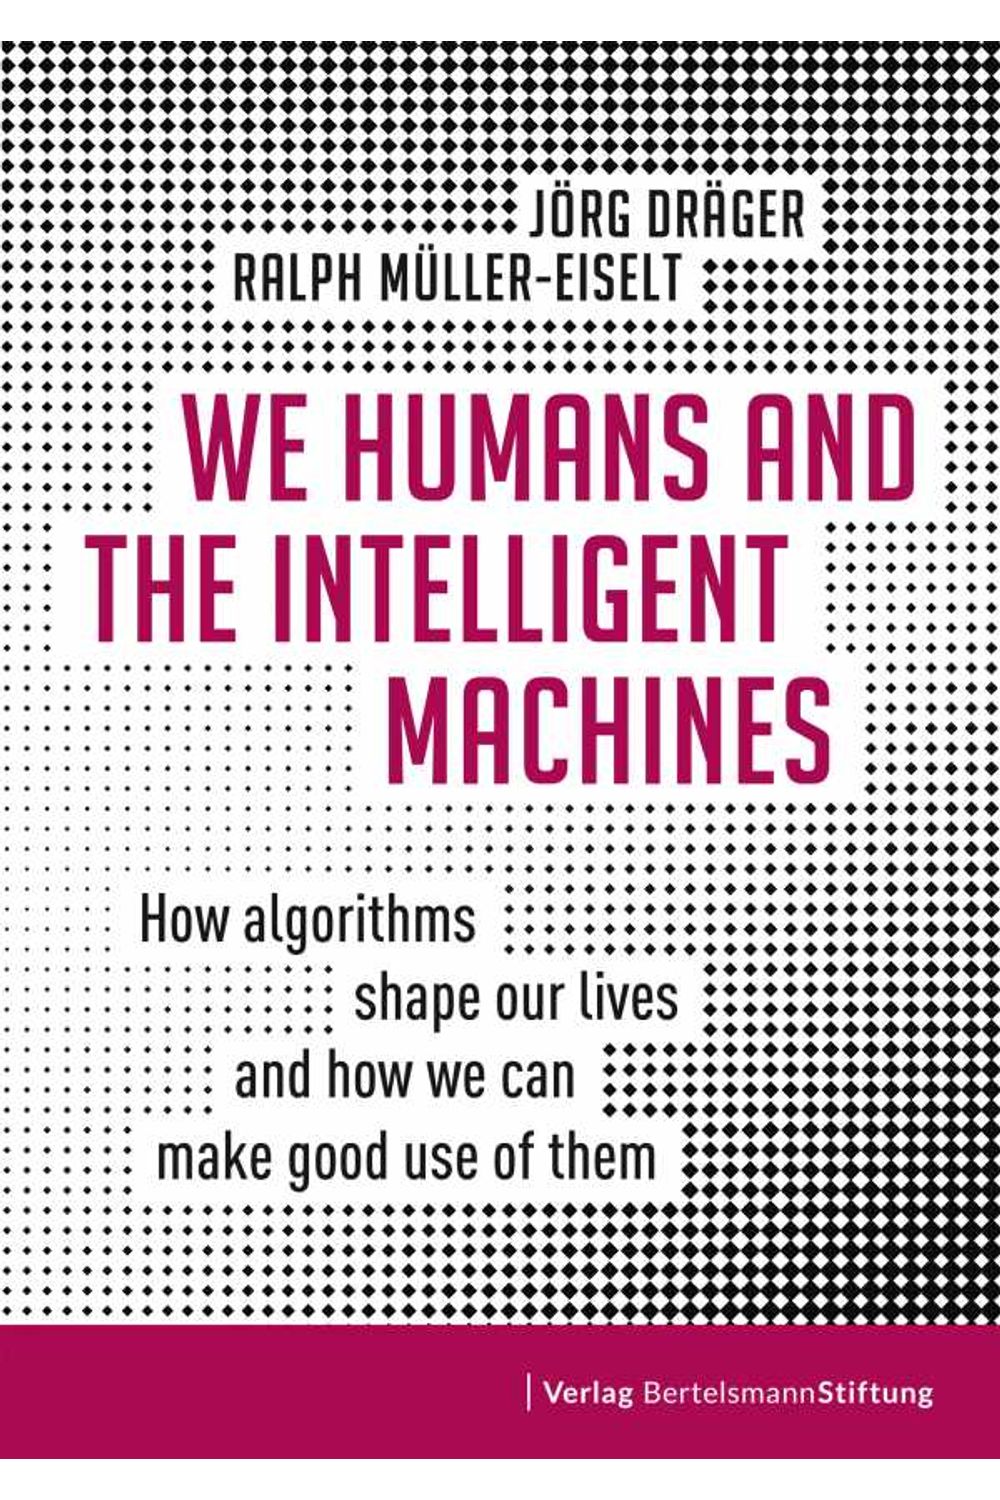 bw-we-humans-and-the-intelligent-machines-verlag-bertelsmann-stiftung-9783867938860